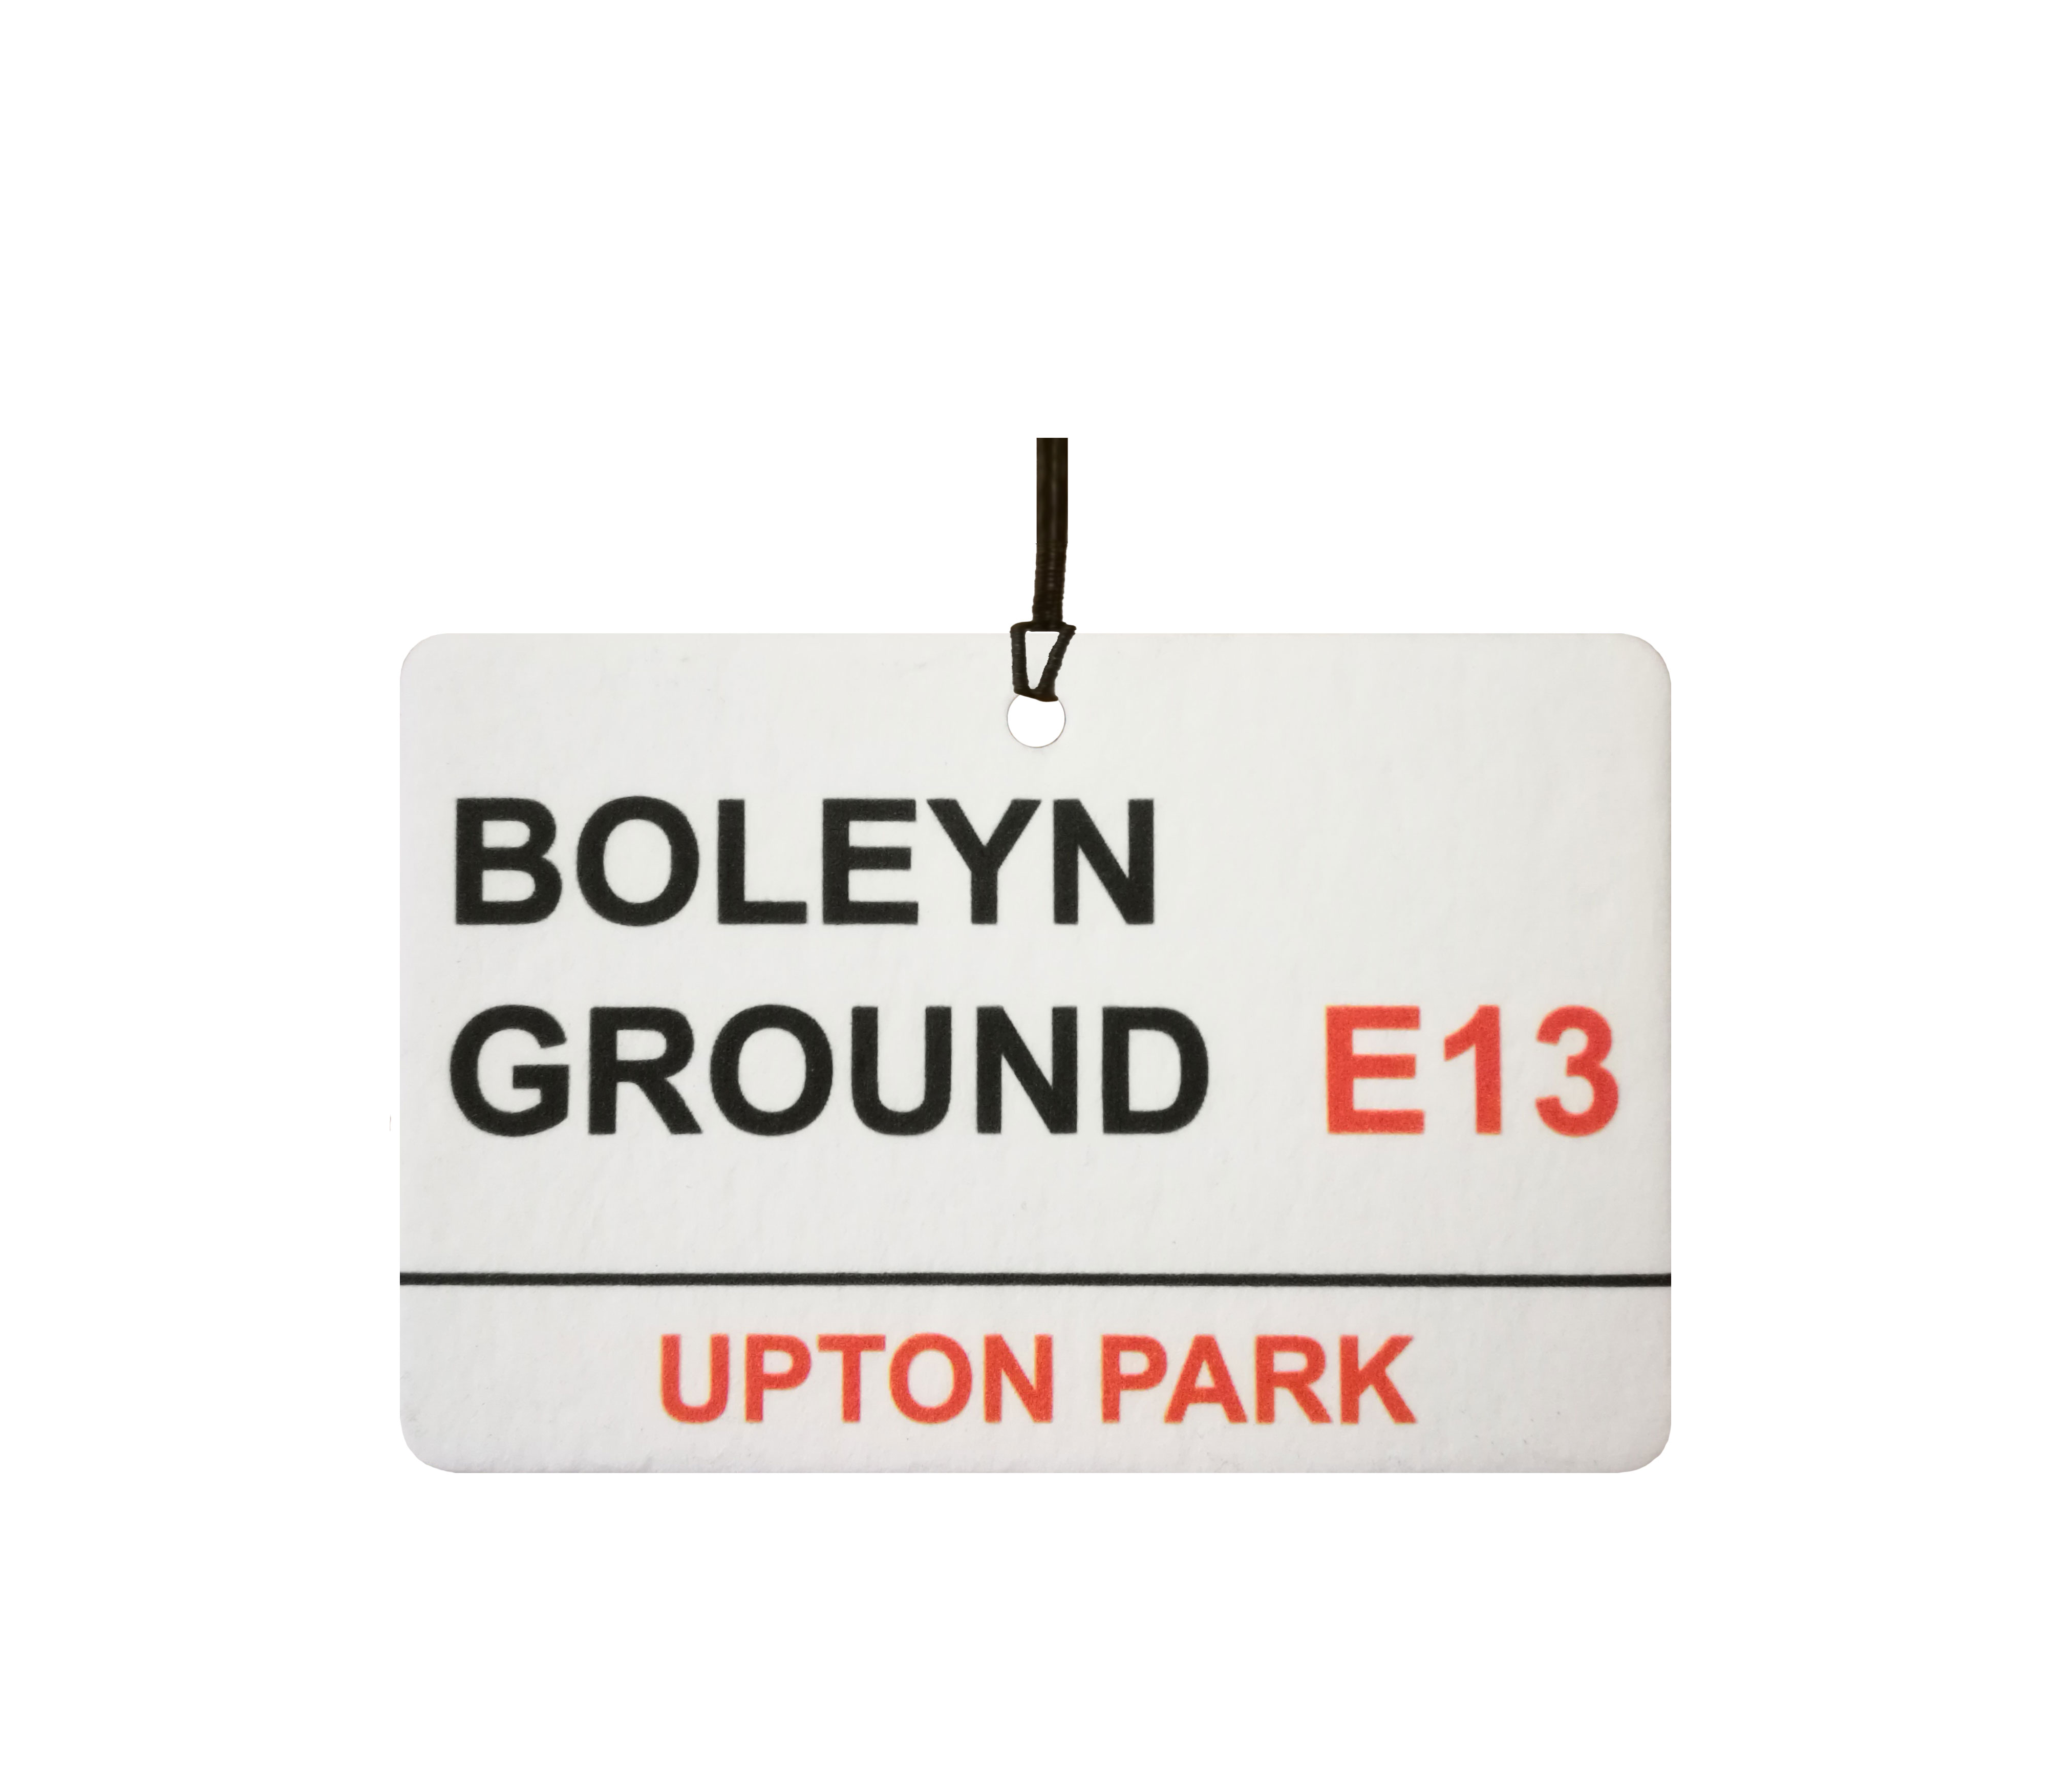 West Ham Utd / Boleyn Ground Street Sign